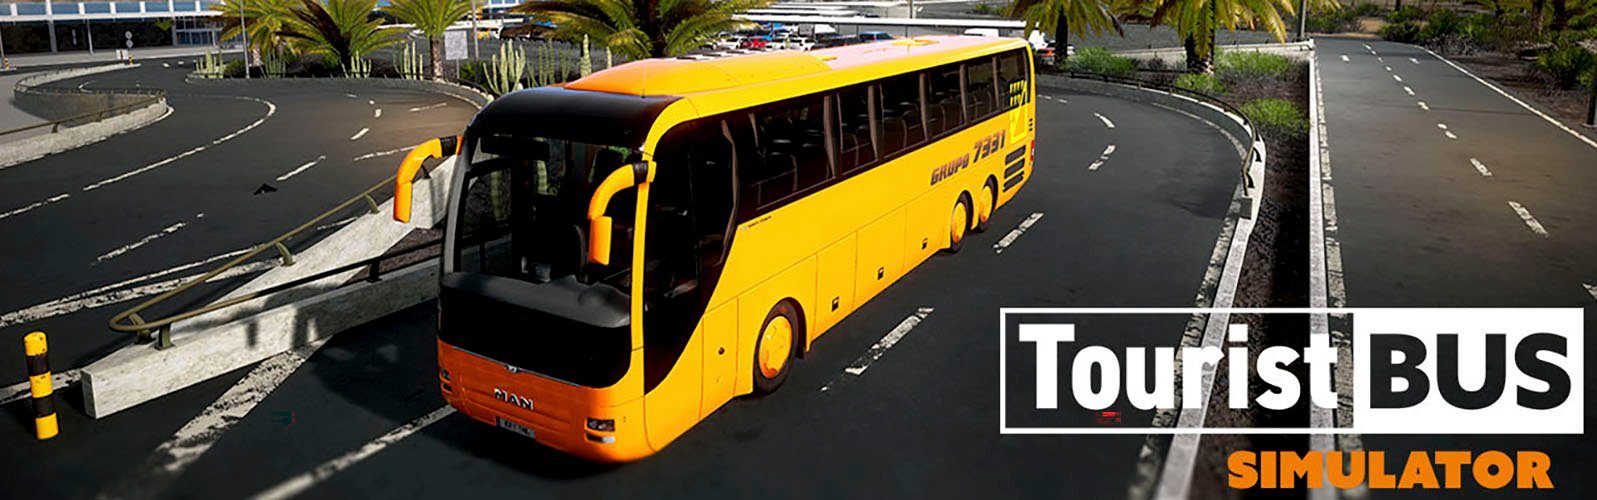 Bus PlayStation Tourist 5 Simulator